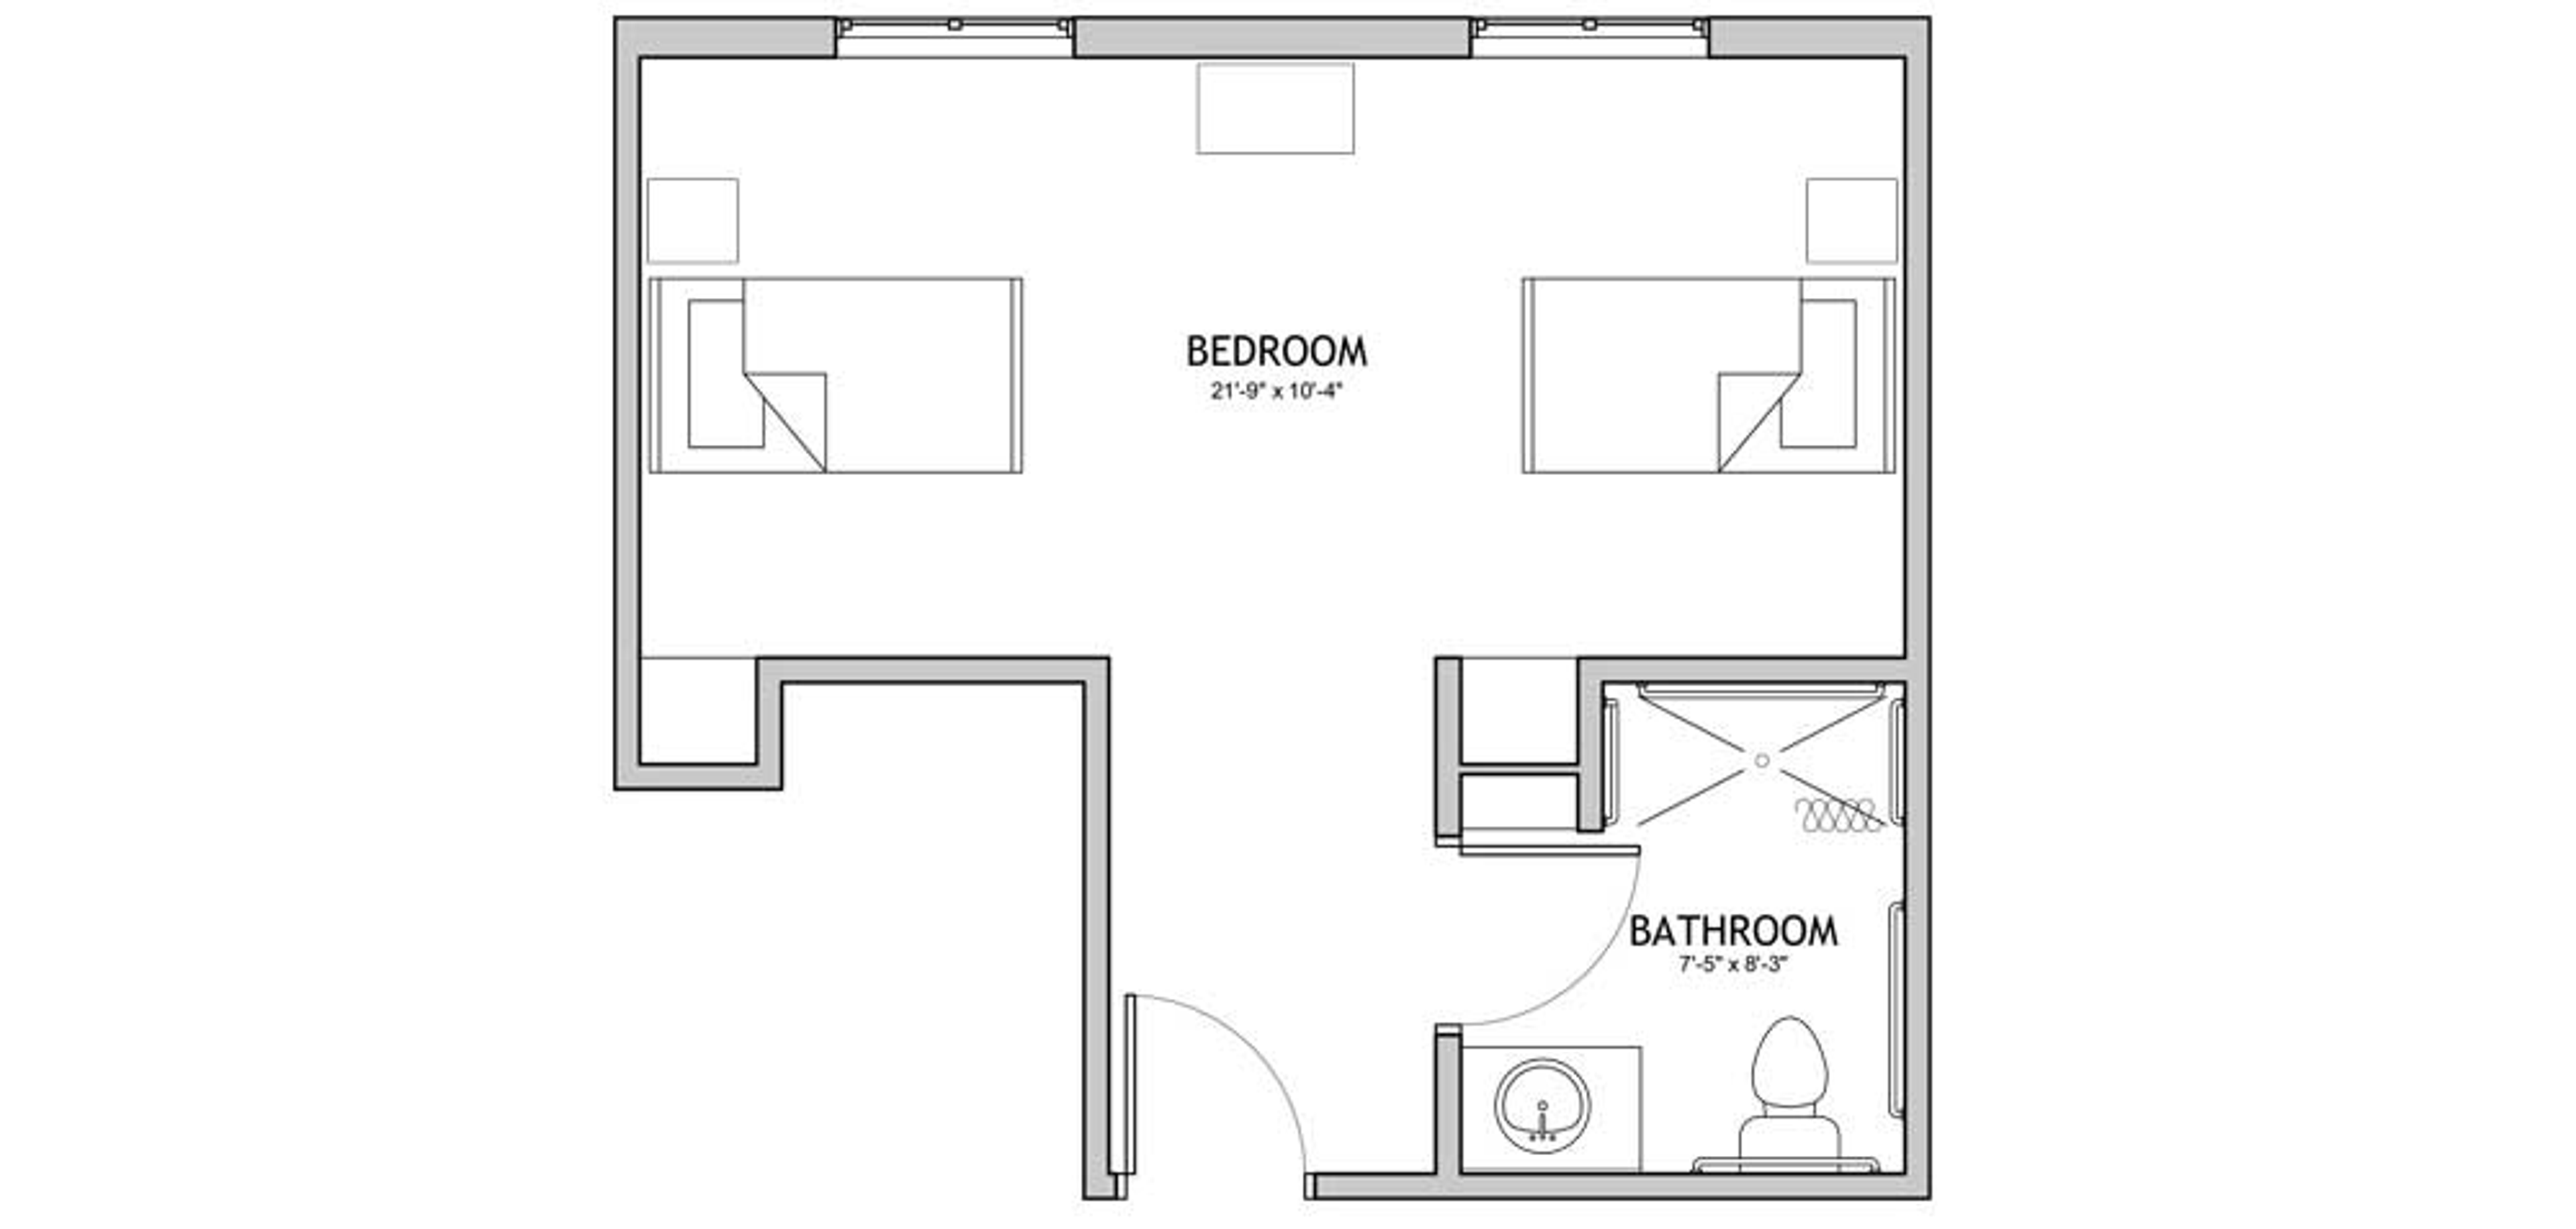 Floorplan - The Auberge at Peoria - 1 bed, 1 bath, Companion Suite Memory Care